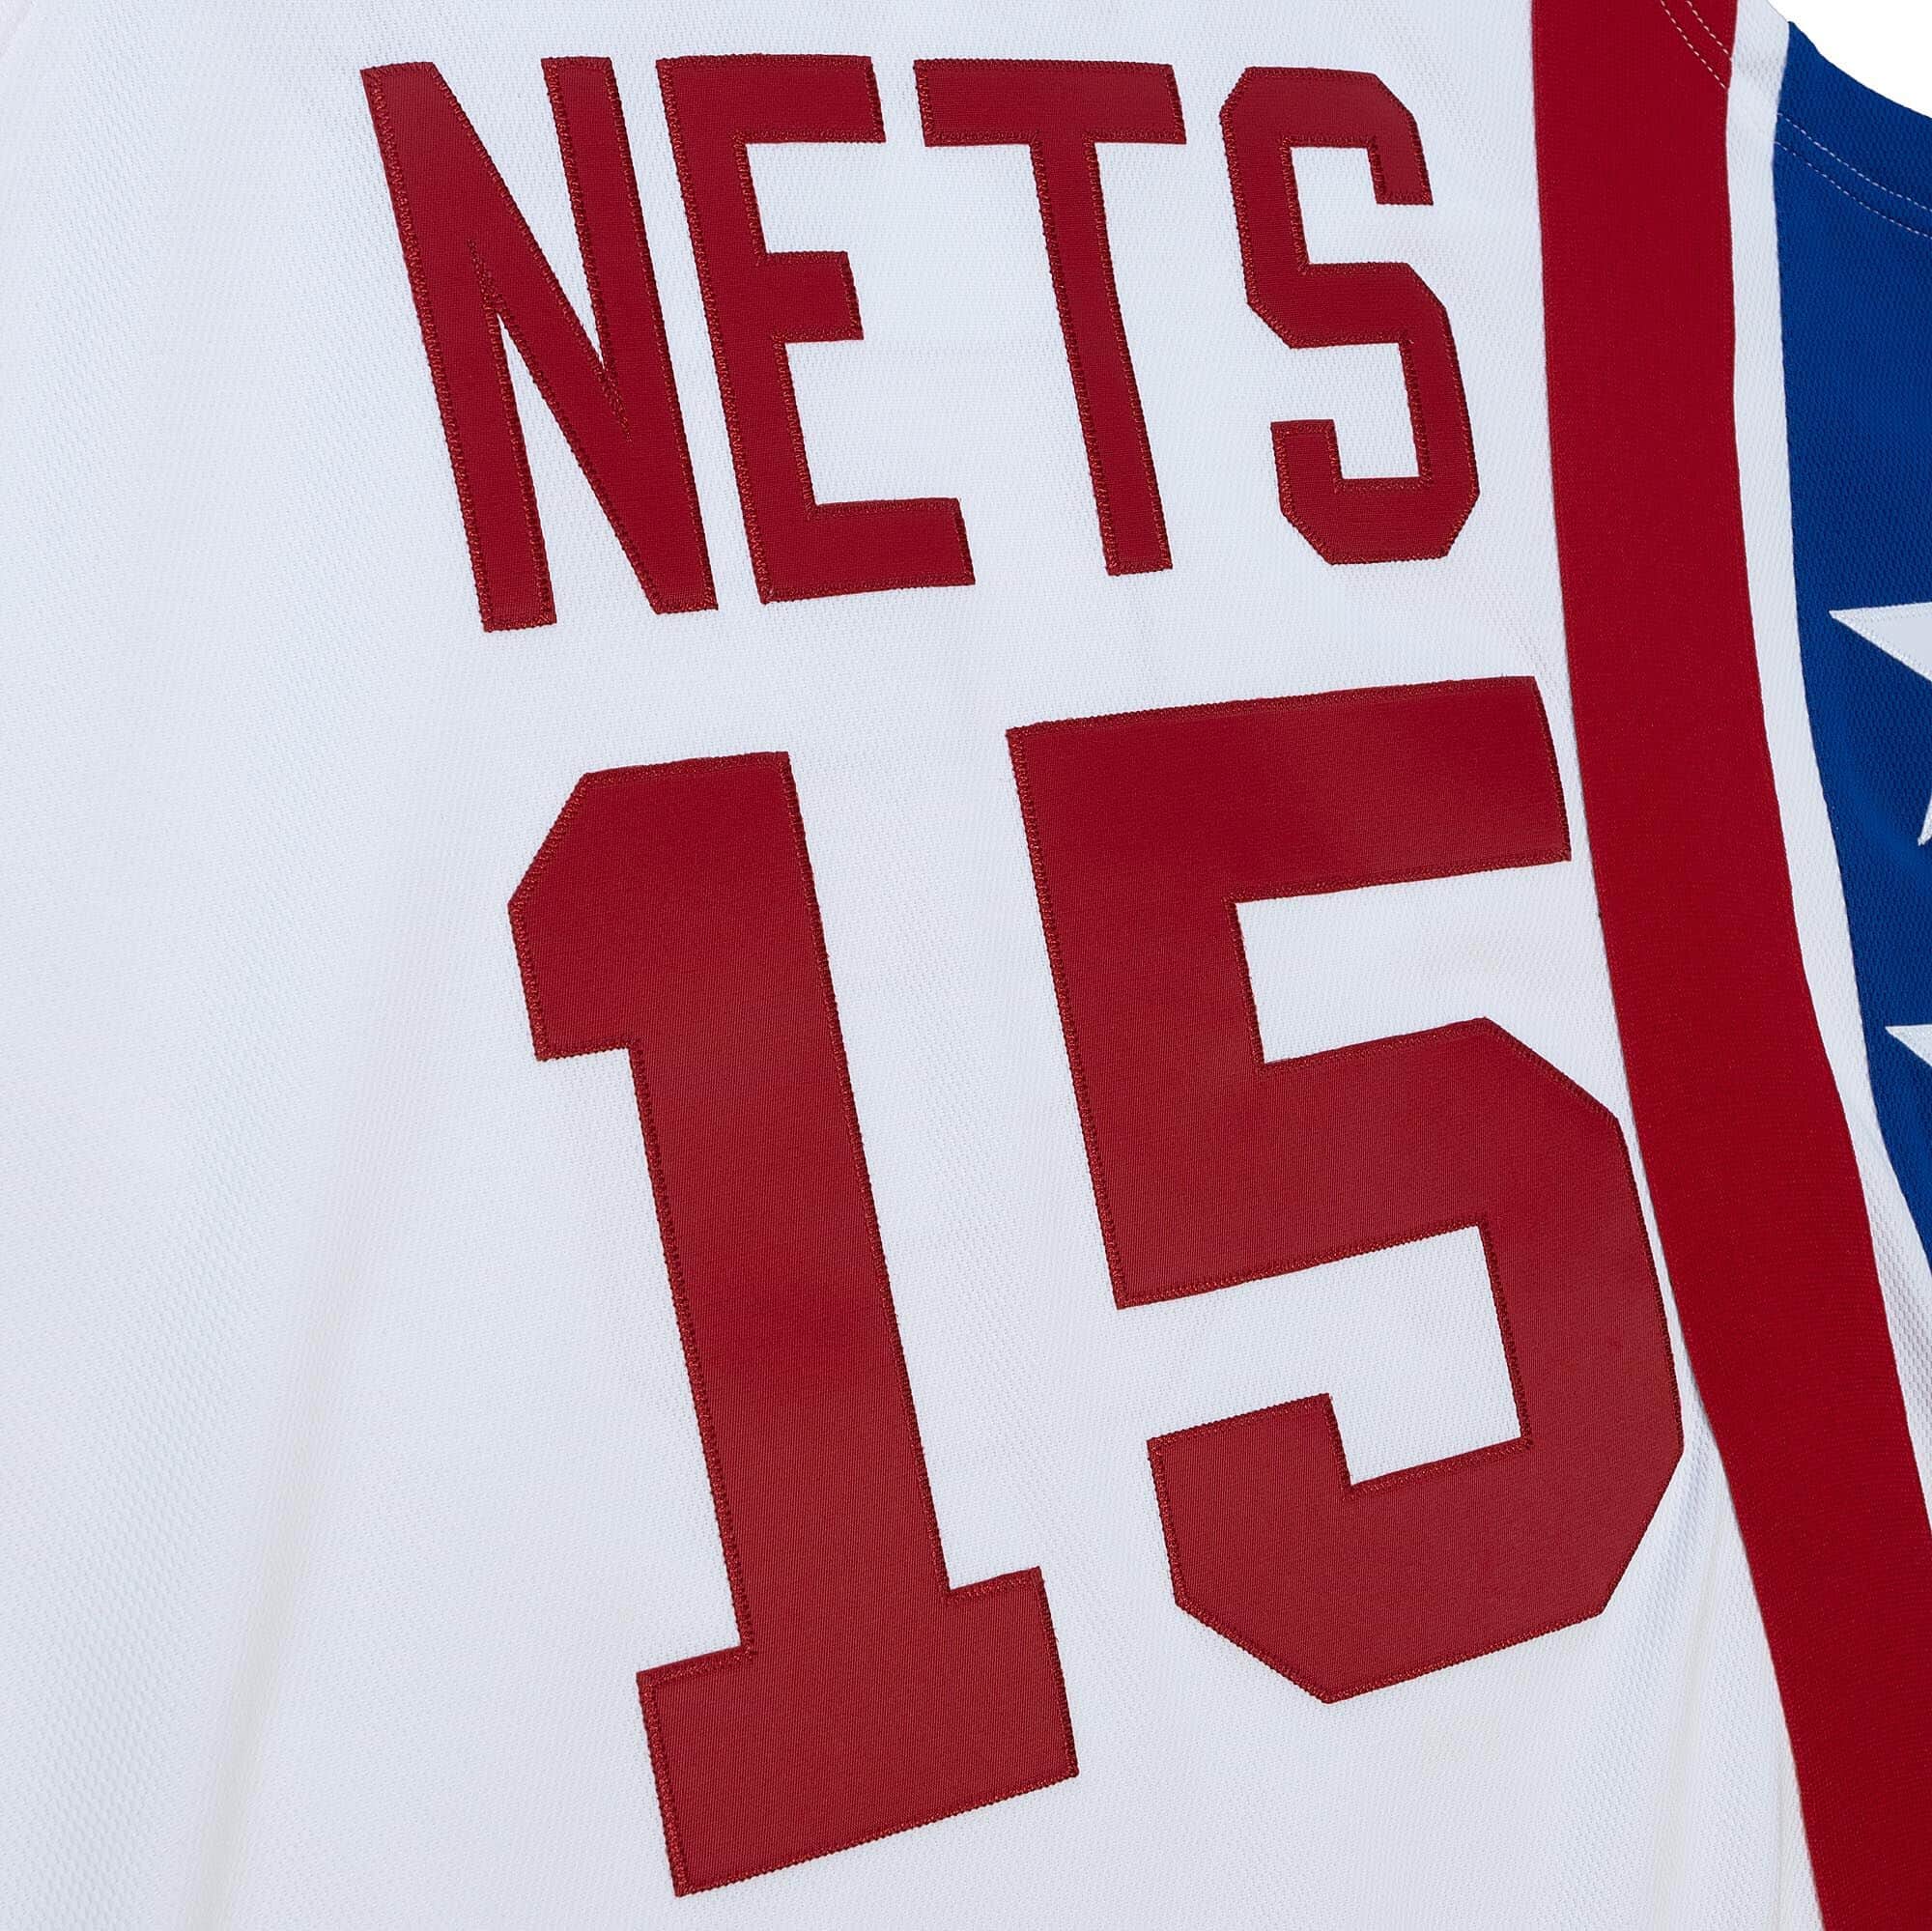 Vince Carter New Jersey Nets HWC Throwback NBA Authentic Jersey –  Basketball Jersey World